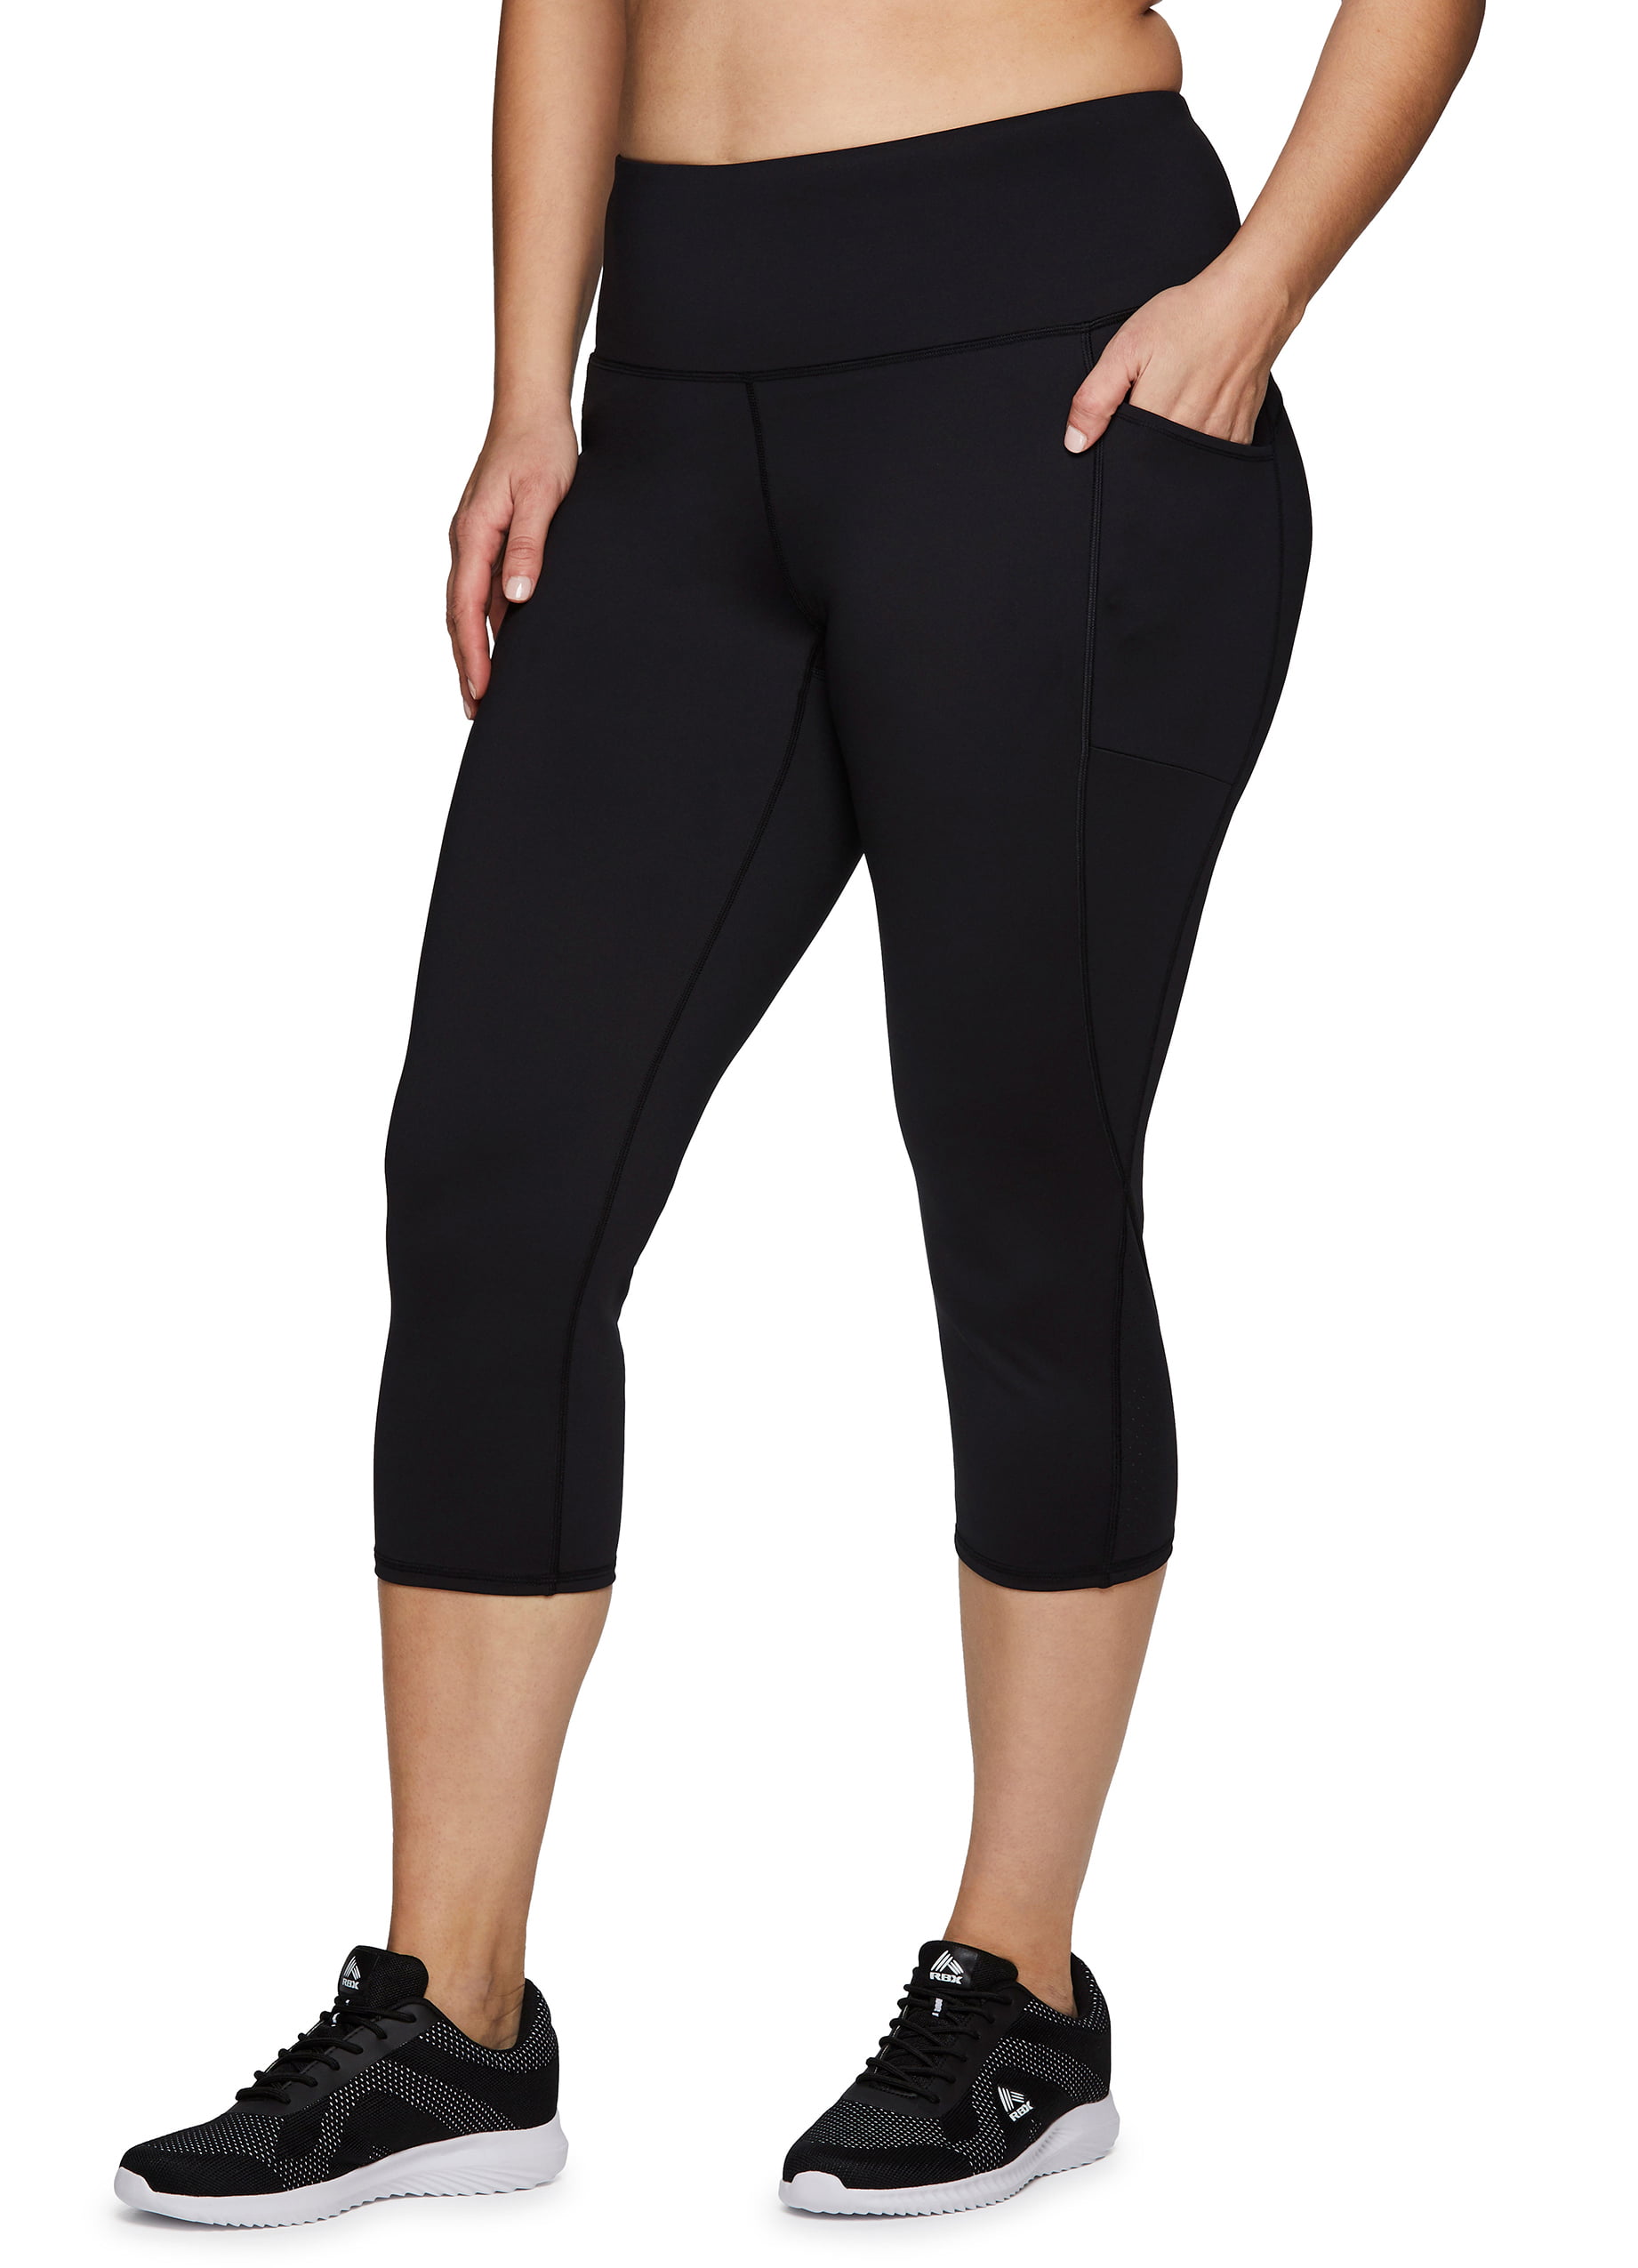 RBX Active Women S Plus Size Lightweight Squat Proof Capri Legging With Pockets Walmart Com